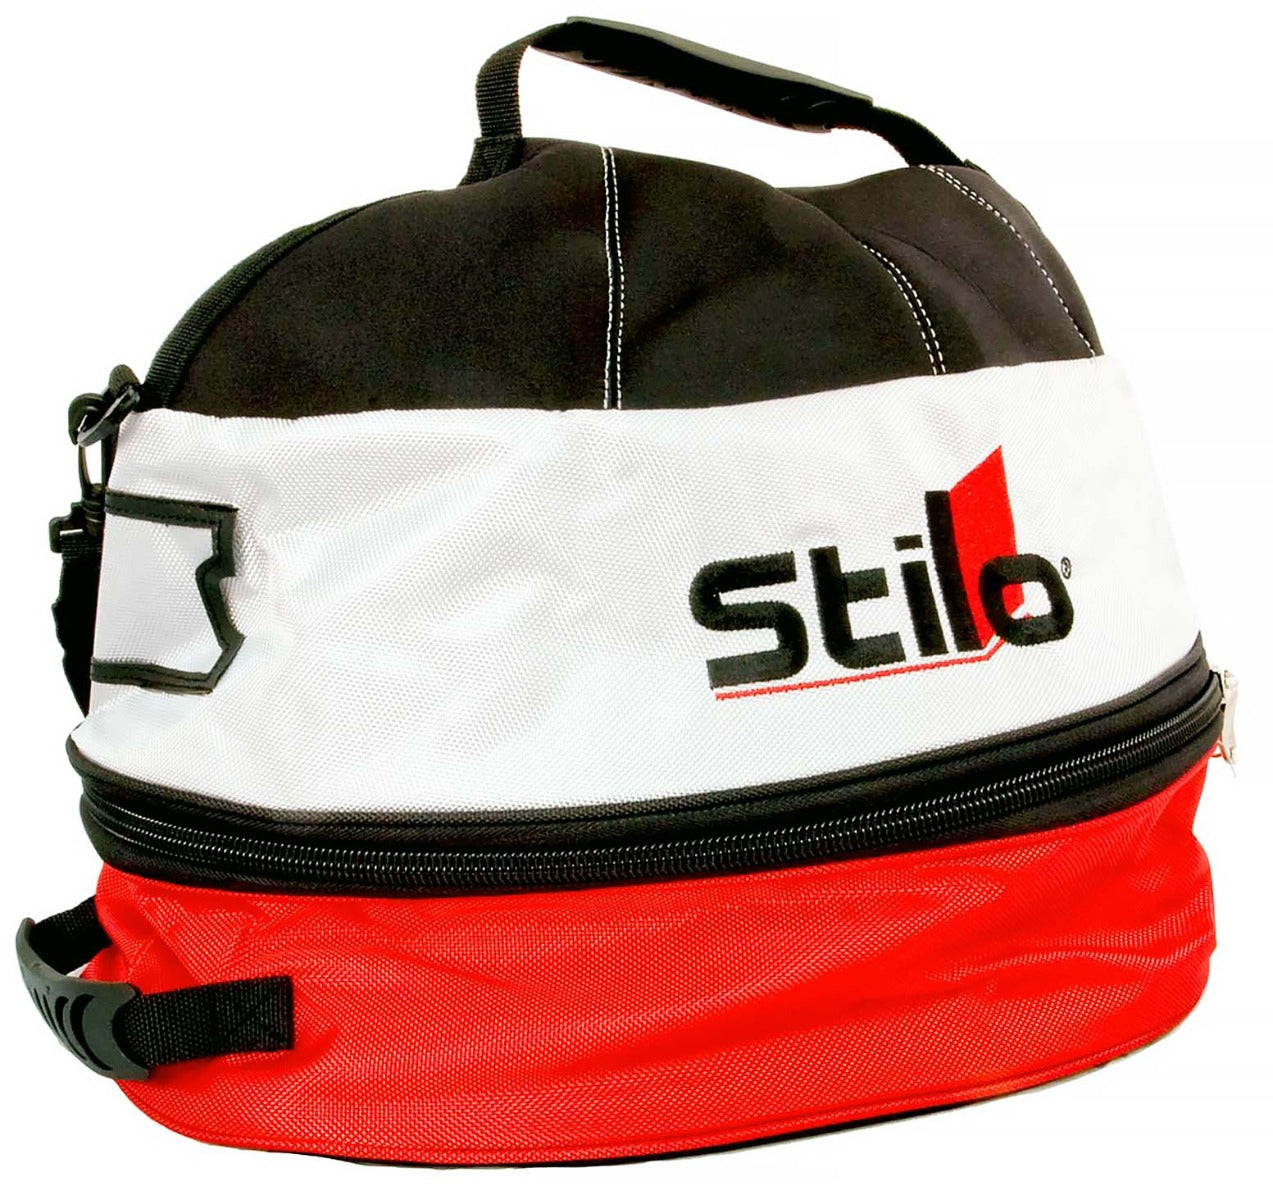 The Stilo Helmets racing helmet bag YY0016 stores your Stilo helmet plus your HANS device in one durable, convenience bag.